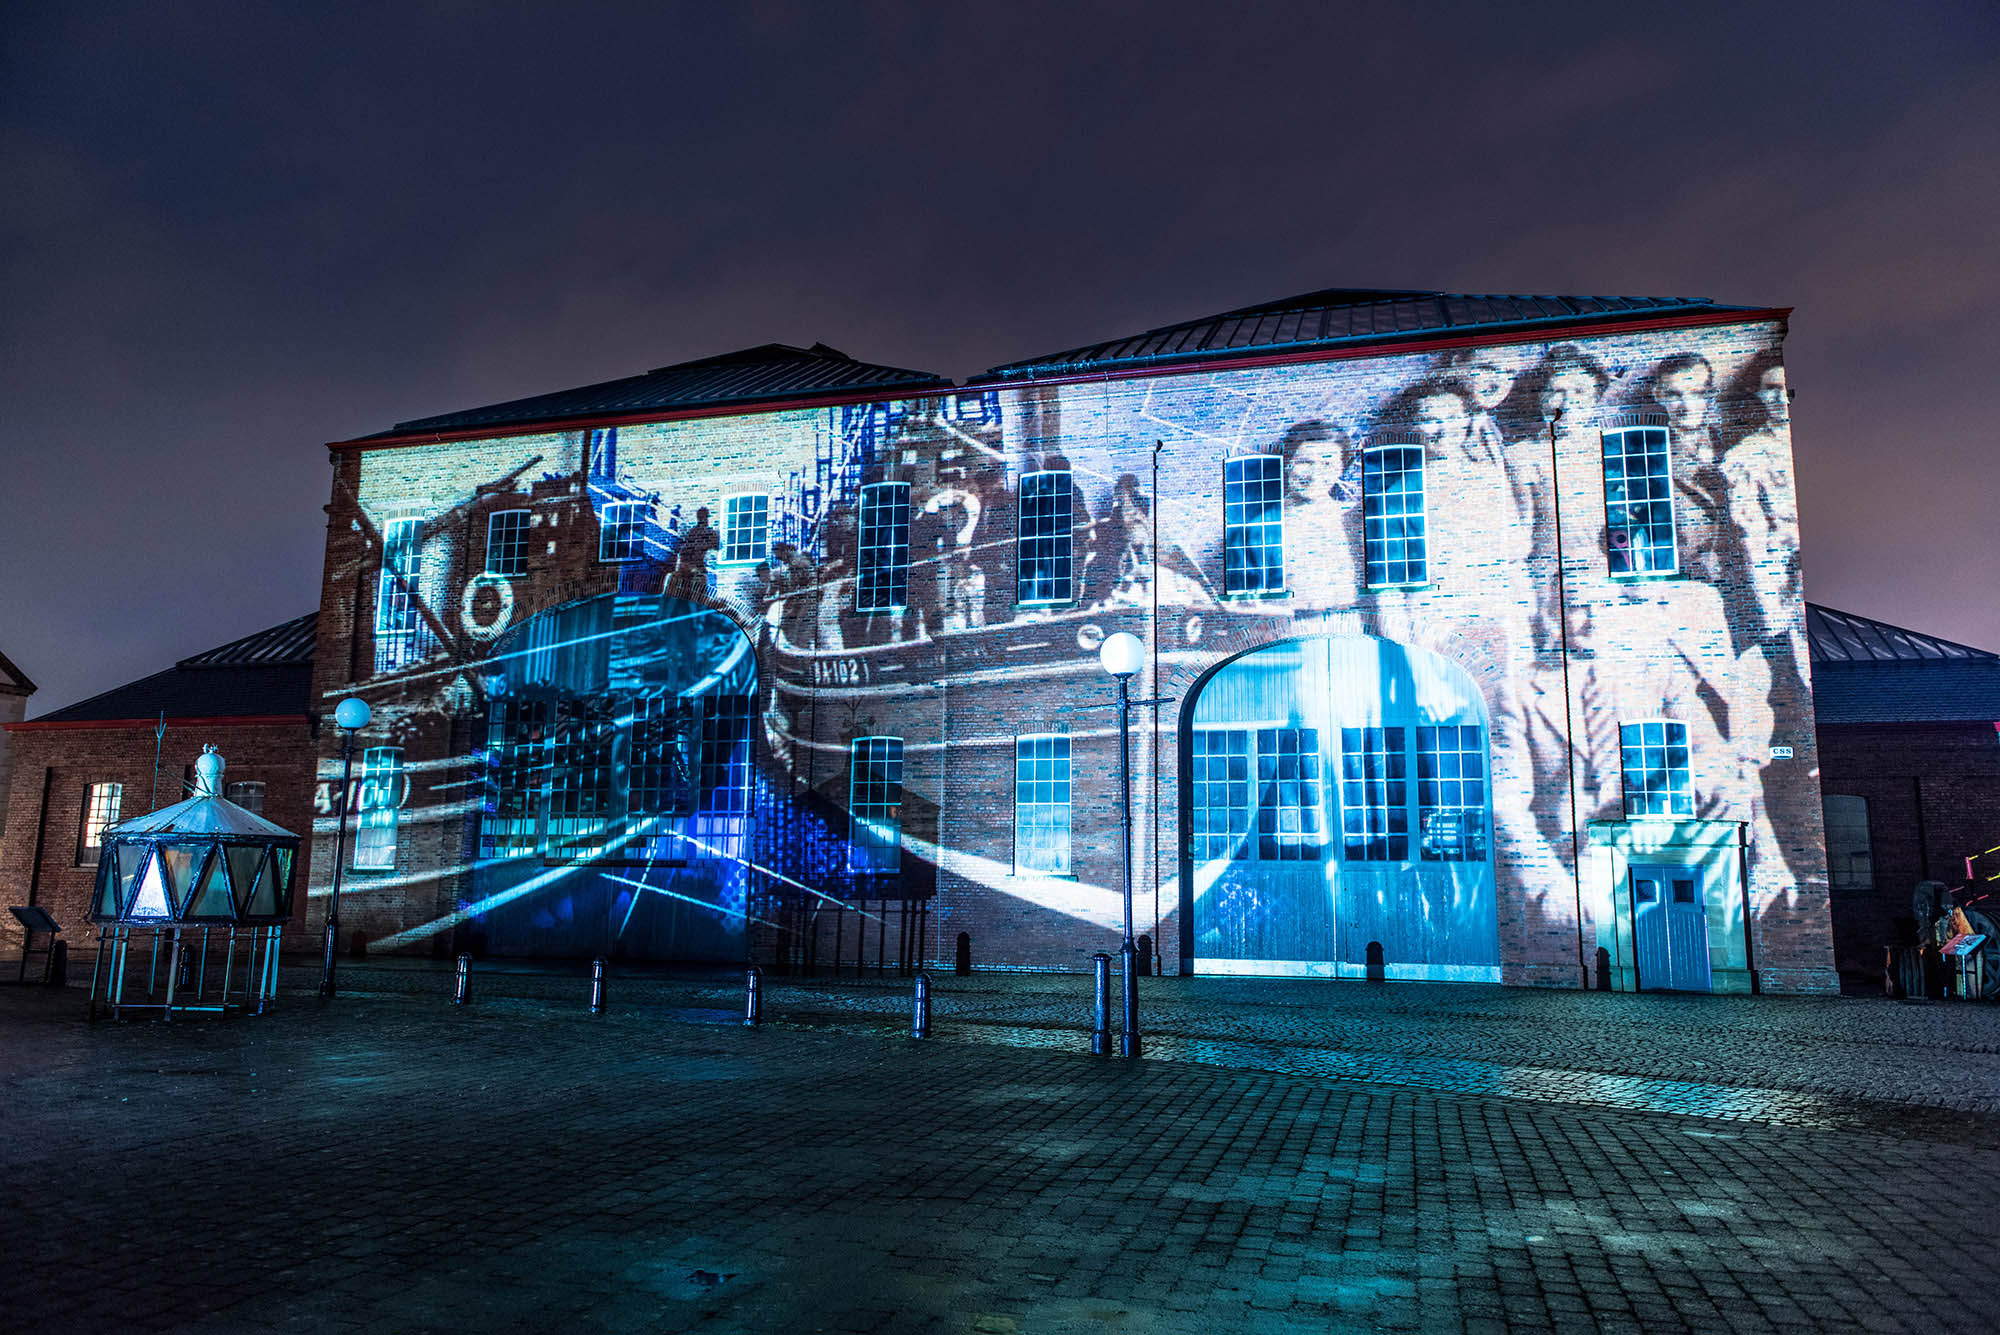 Illumination, Irvine Maritime Museum projection show, archive footage